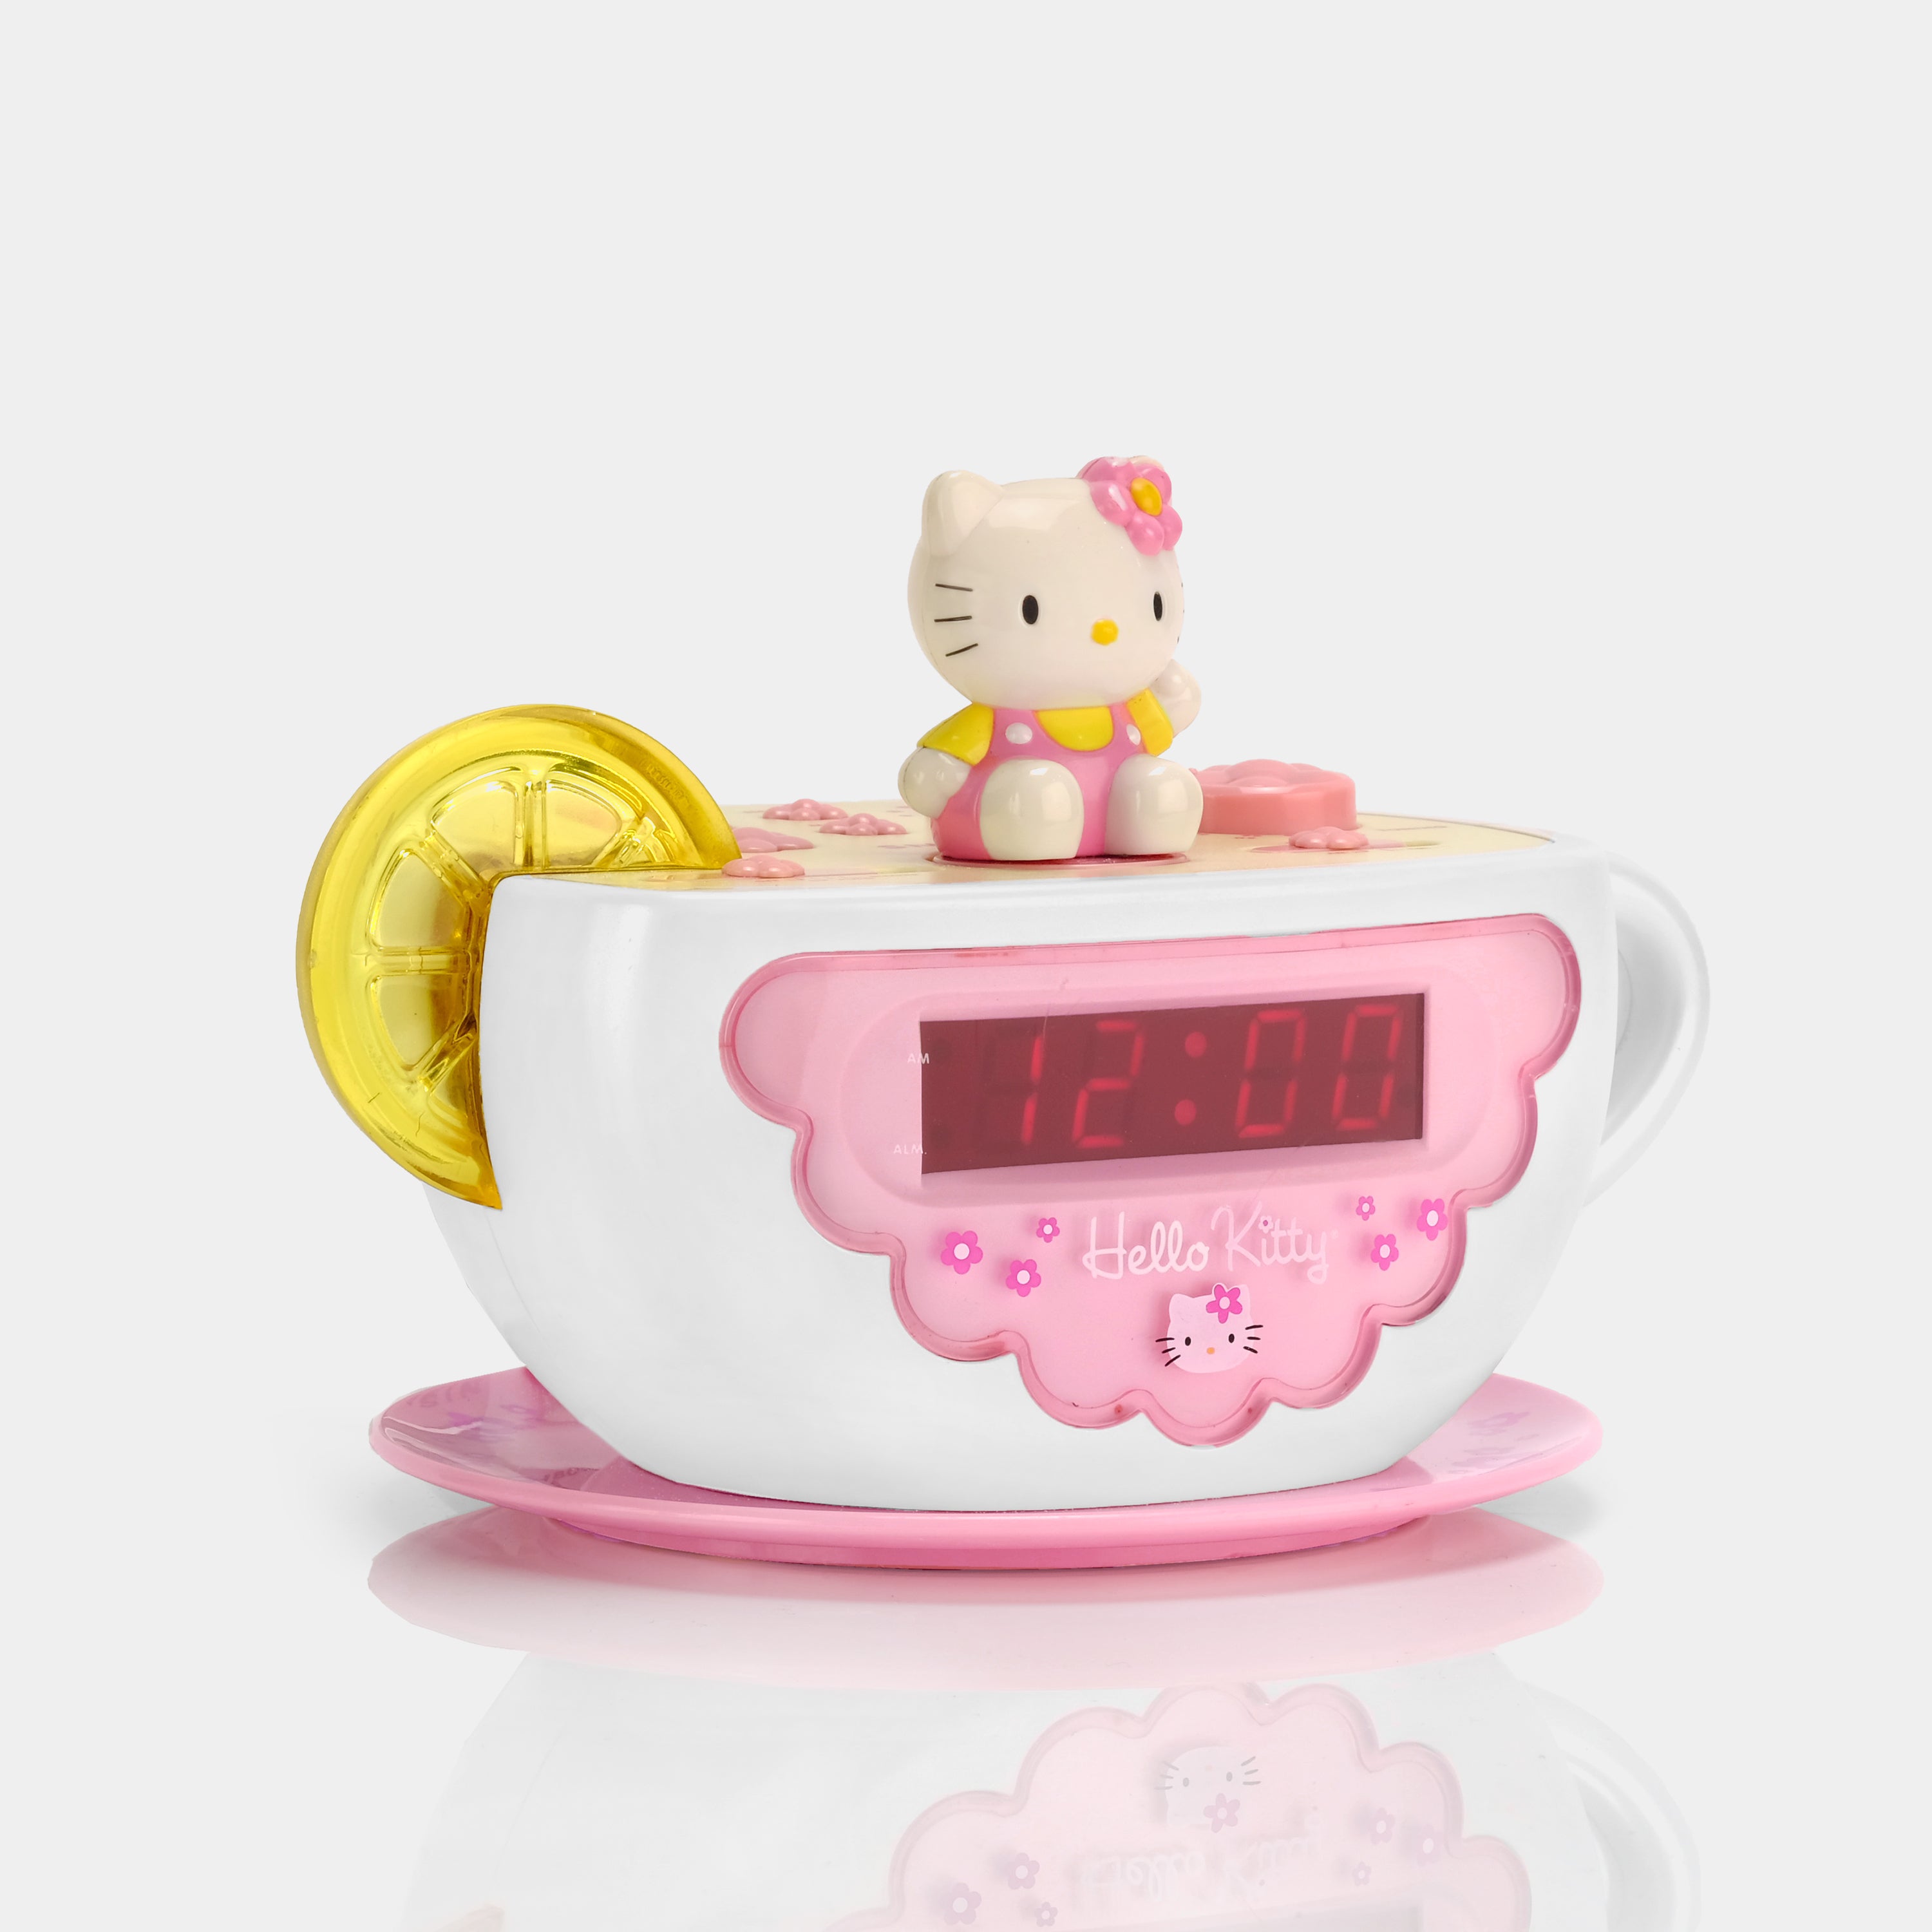 Helly Kitty HK155 Teacup Radio Alarm Clock